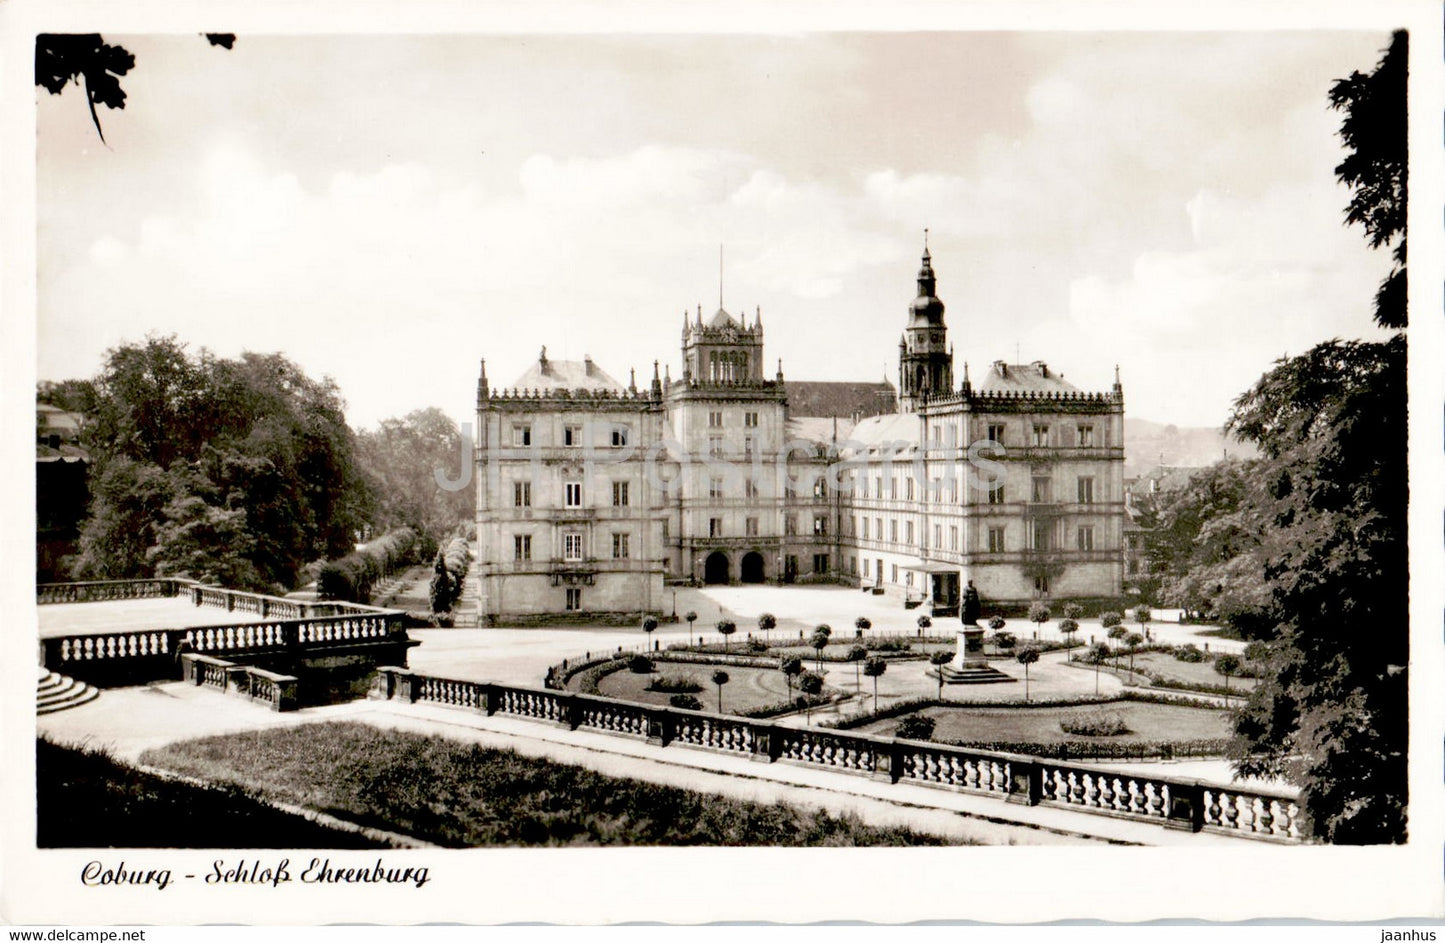 Coburg - Schloss Ehrenburg - castle - old postcard - Germany - unused - JH Postcards